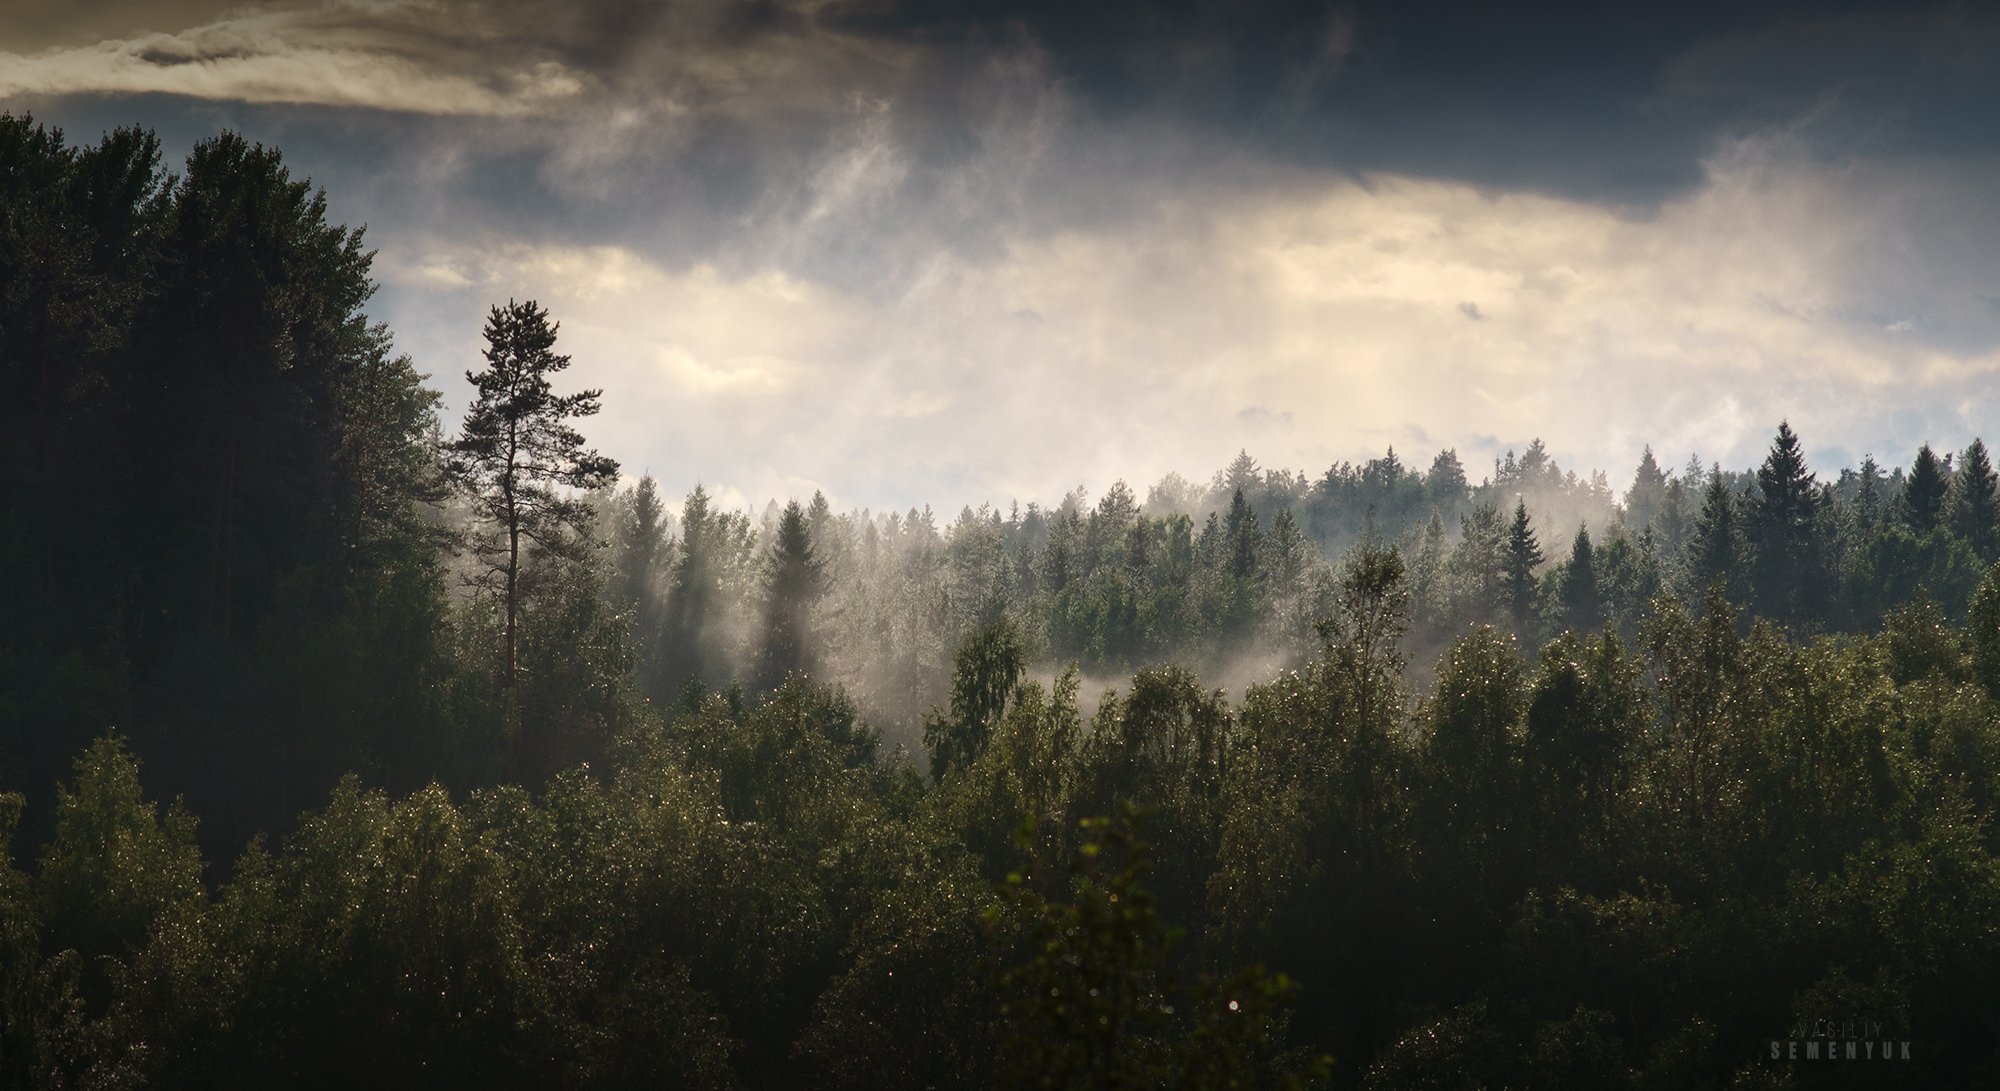 карелия, лето, лес, туман, гроза, клочья тумана, ели, karelia, forest, mist, dramathic sky, storm., Семенюк Василий